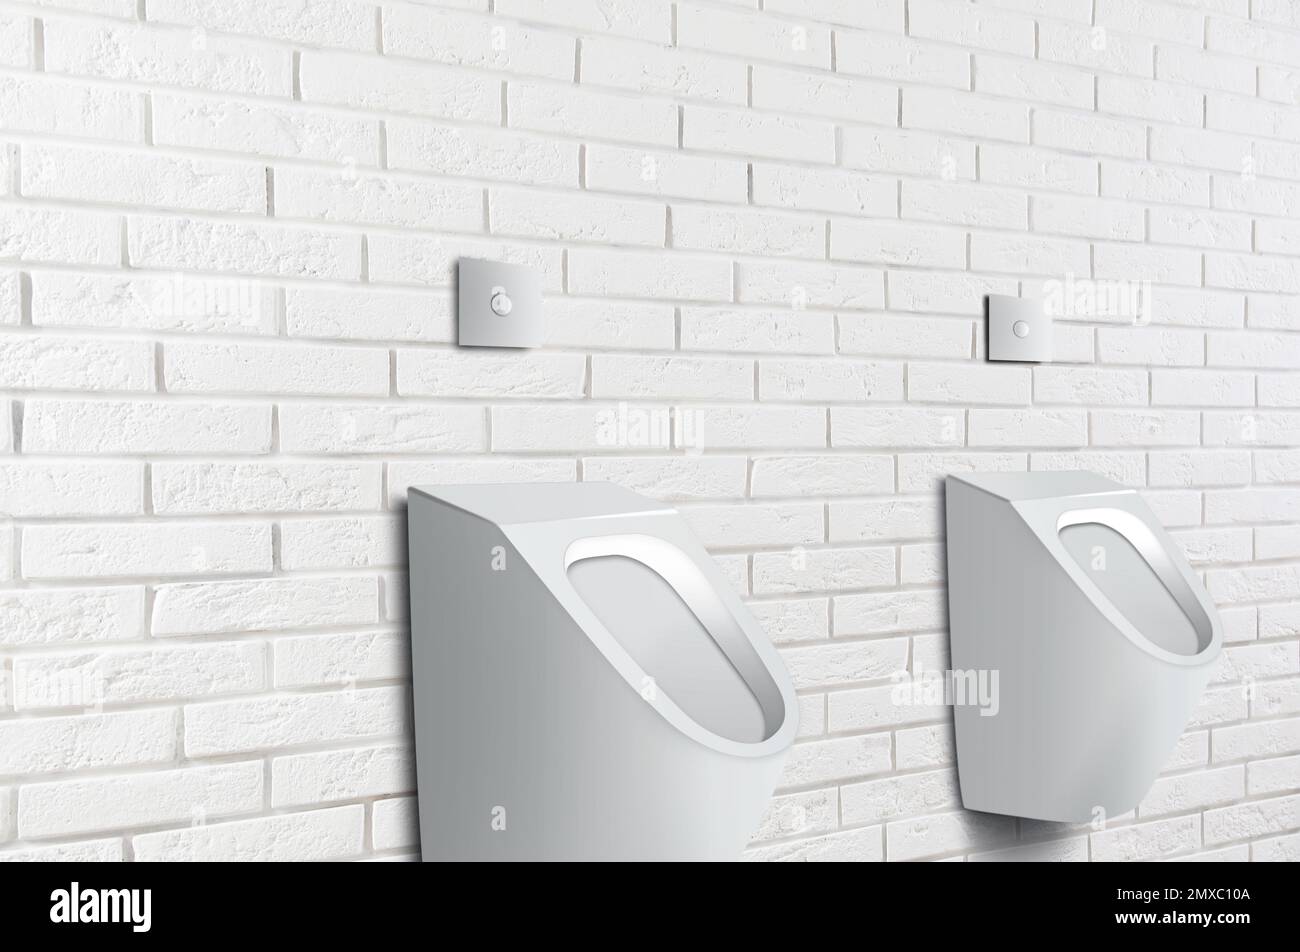 https://c8.alamy.com/comp/2MXC10A/clean-ceramic-urinals-in-mens-public-bathroom-2MXC10A.jpg